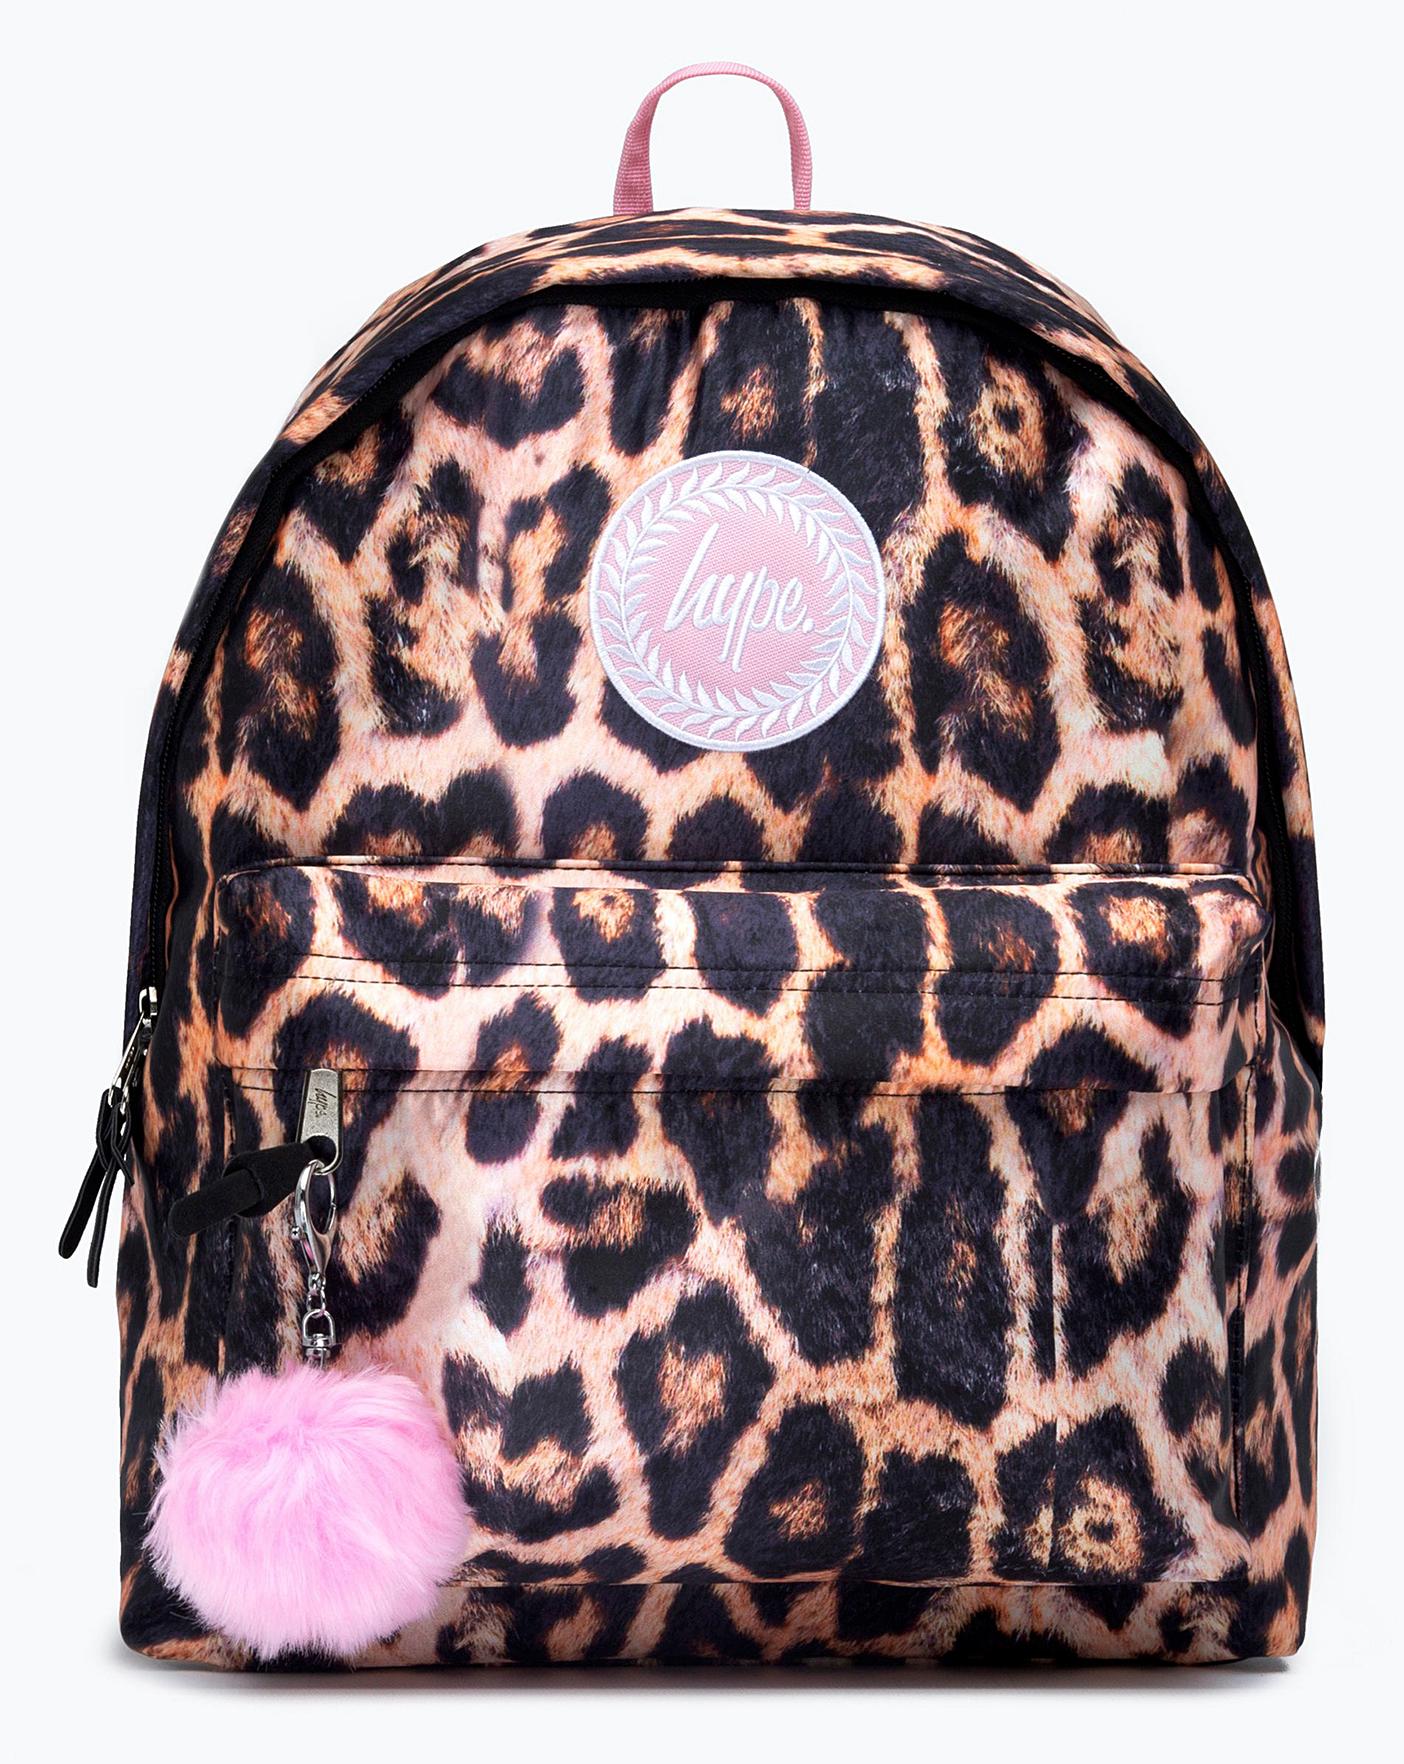 Hype + Hype Leopard Backpack